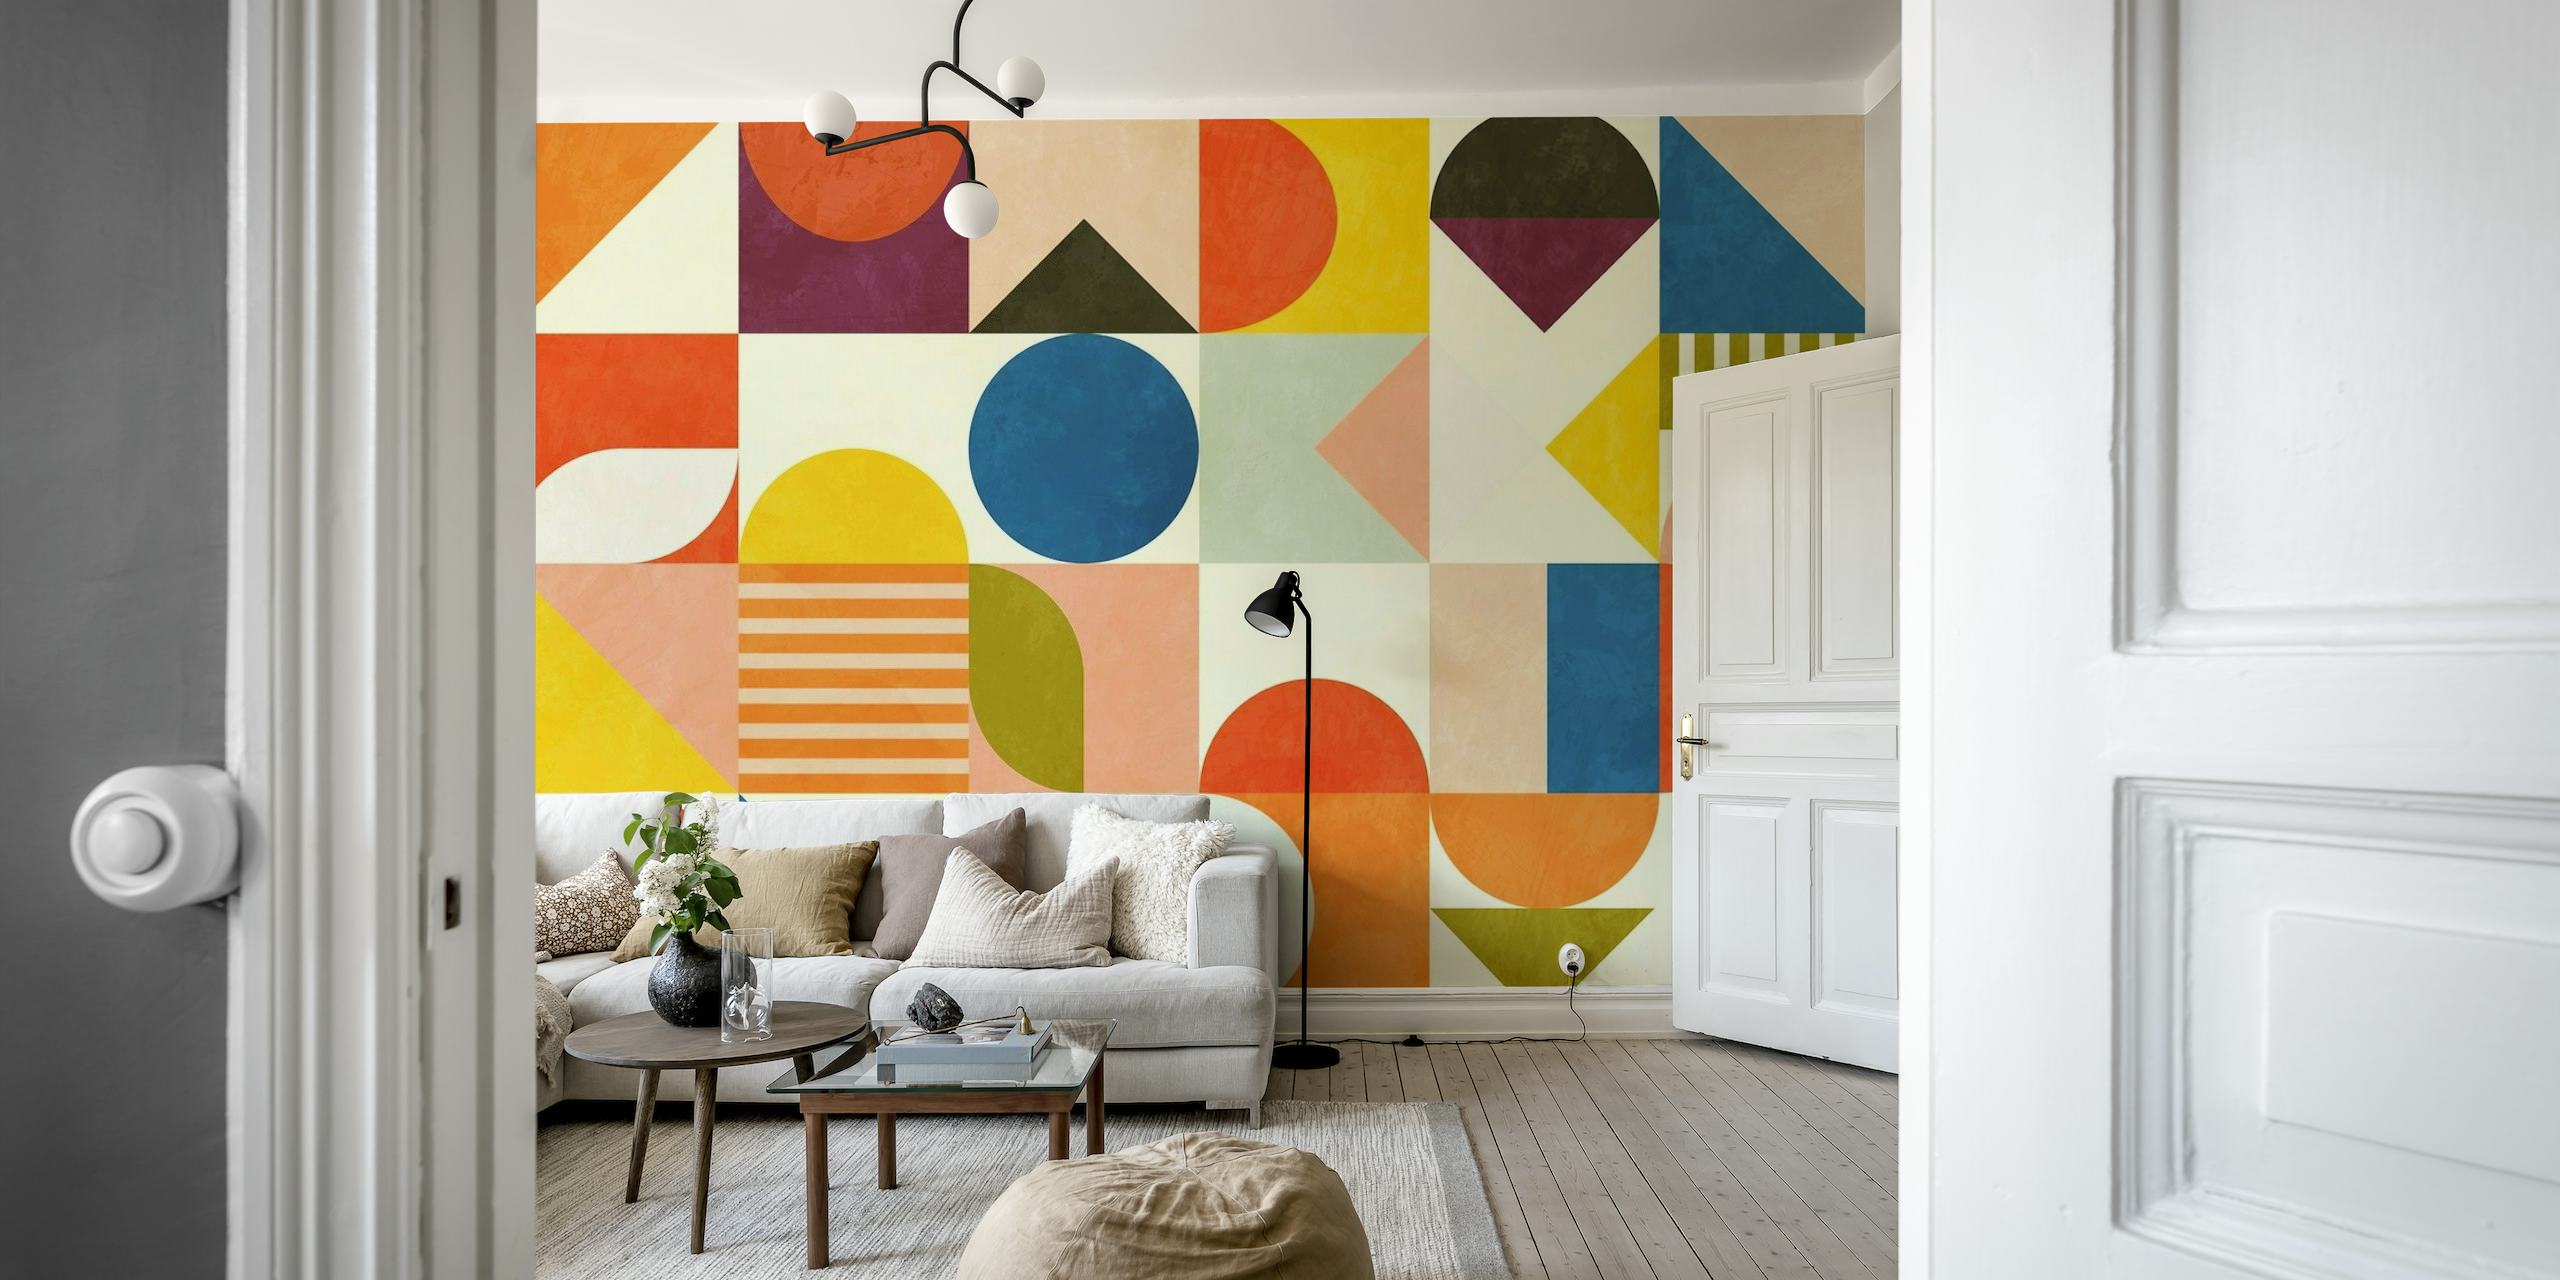 Beautiful display of Mid Century Bauhaus geometric wallpaper with vibrant colors